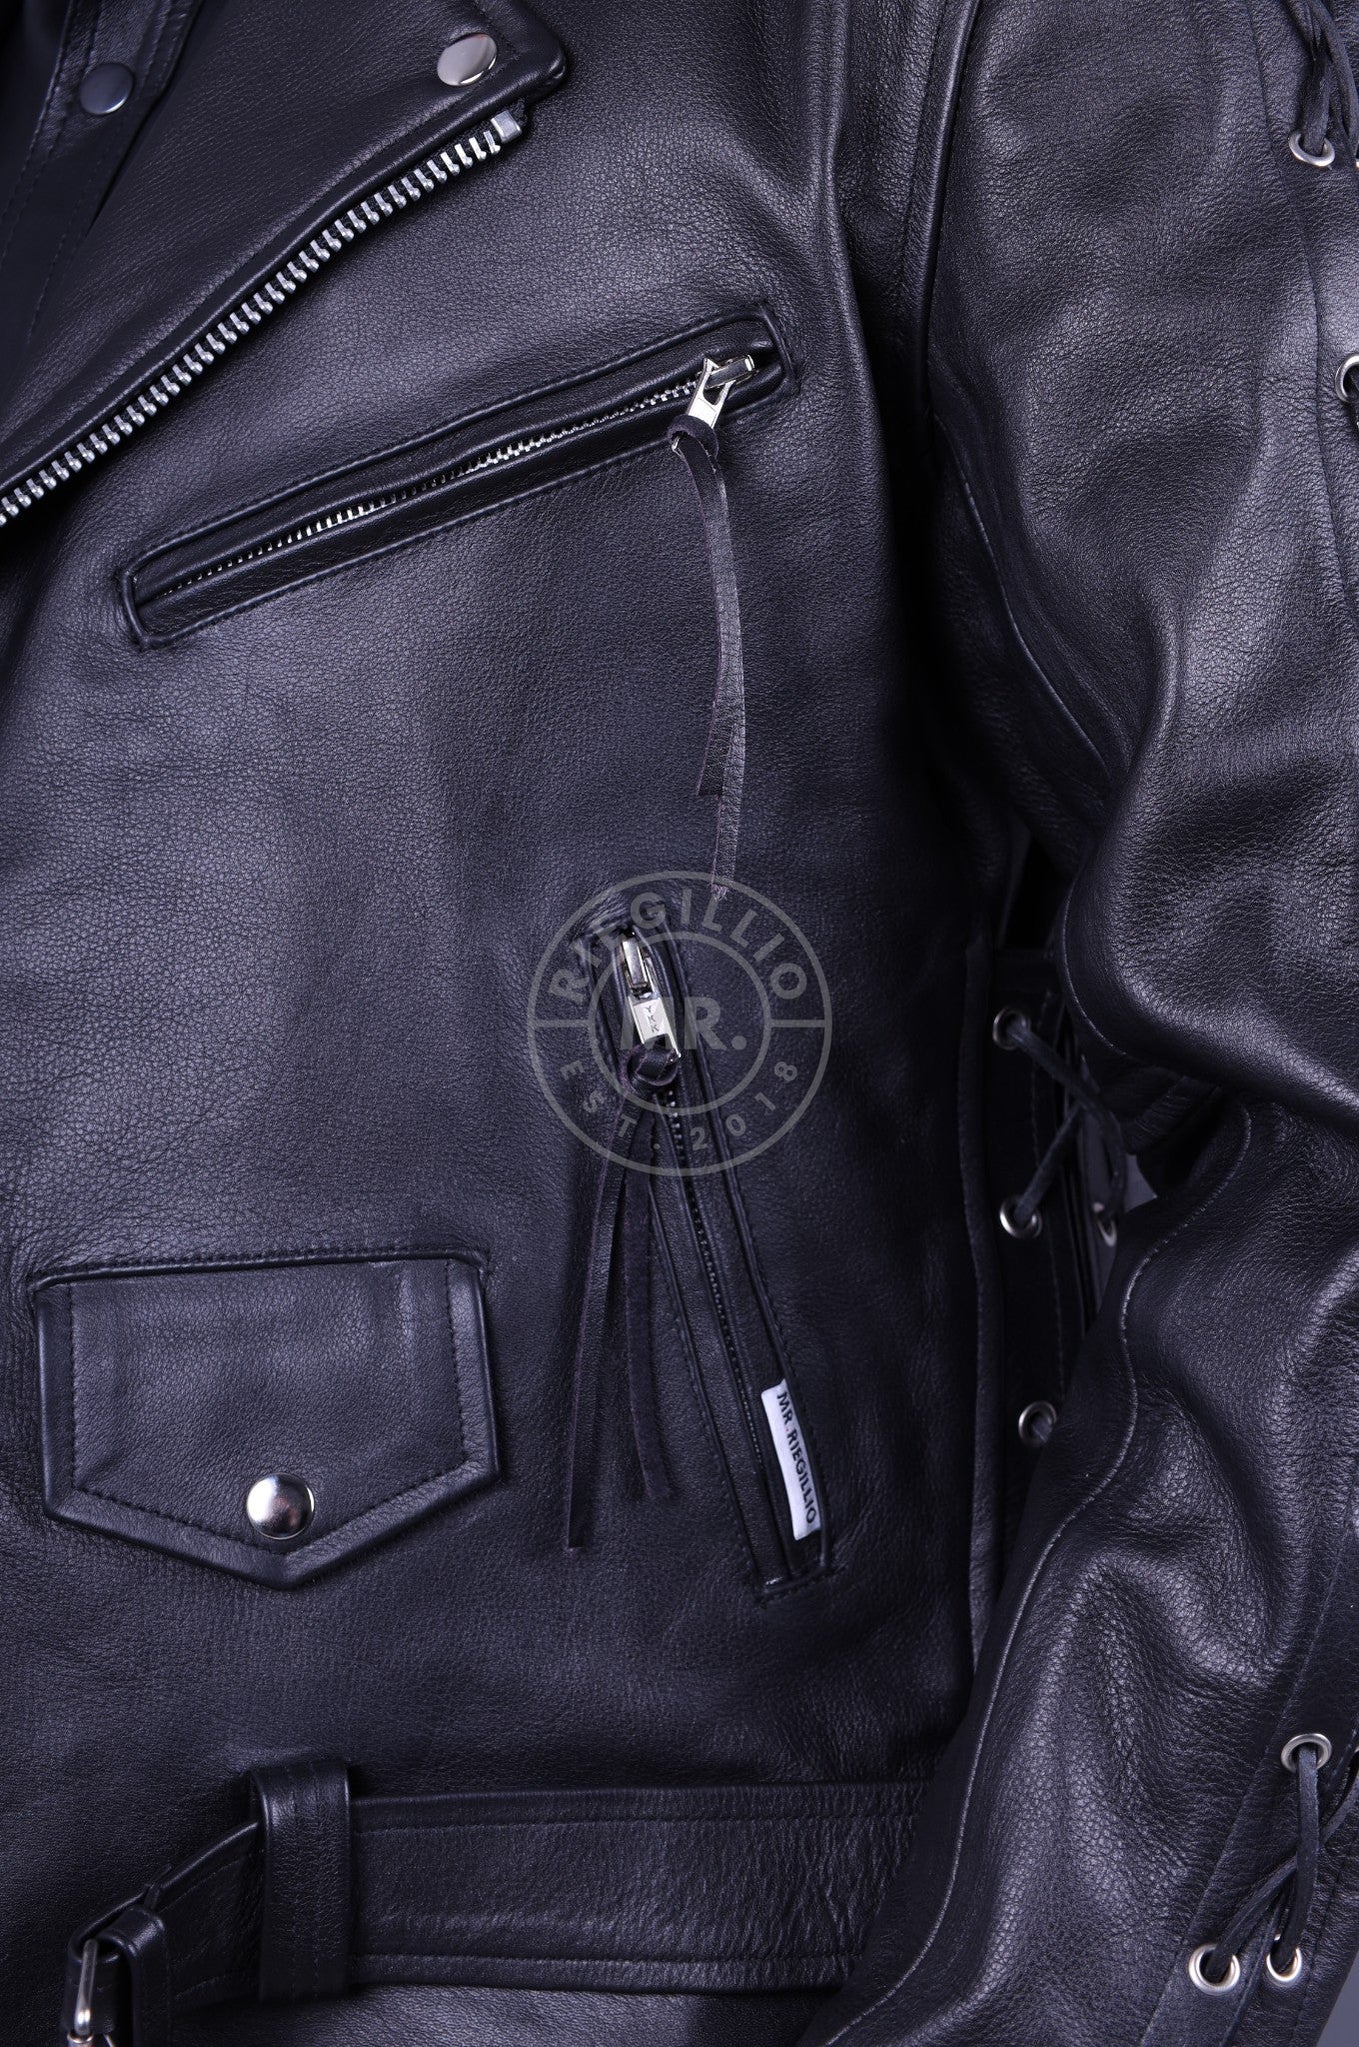 Black Leather Lace Up Brando Jacket *DISCONTINUED ITEM* at MR. Riegillio